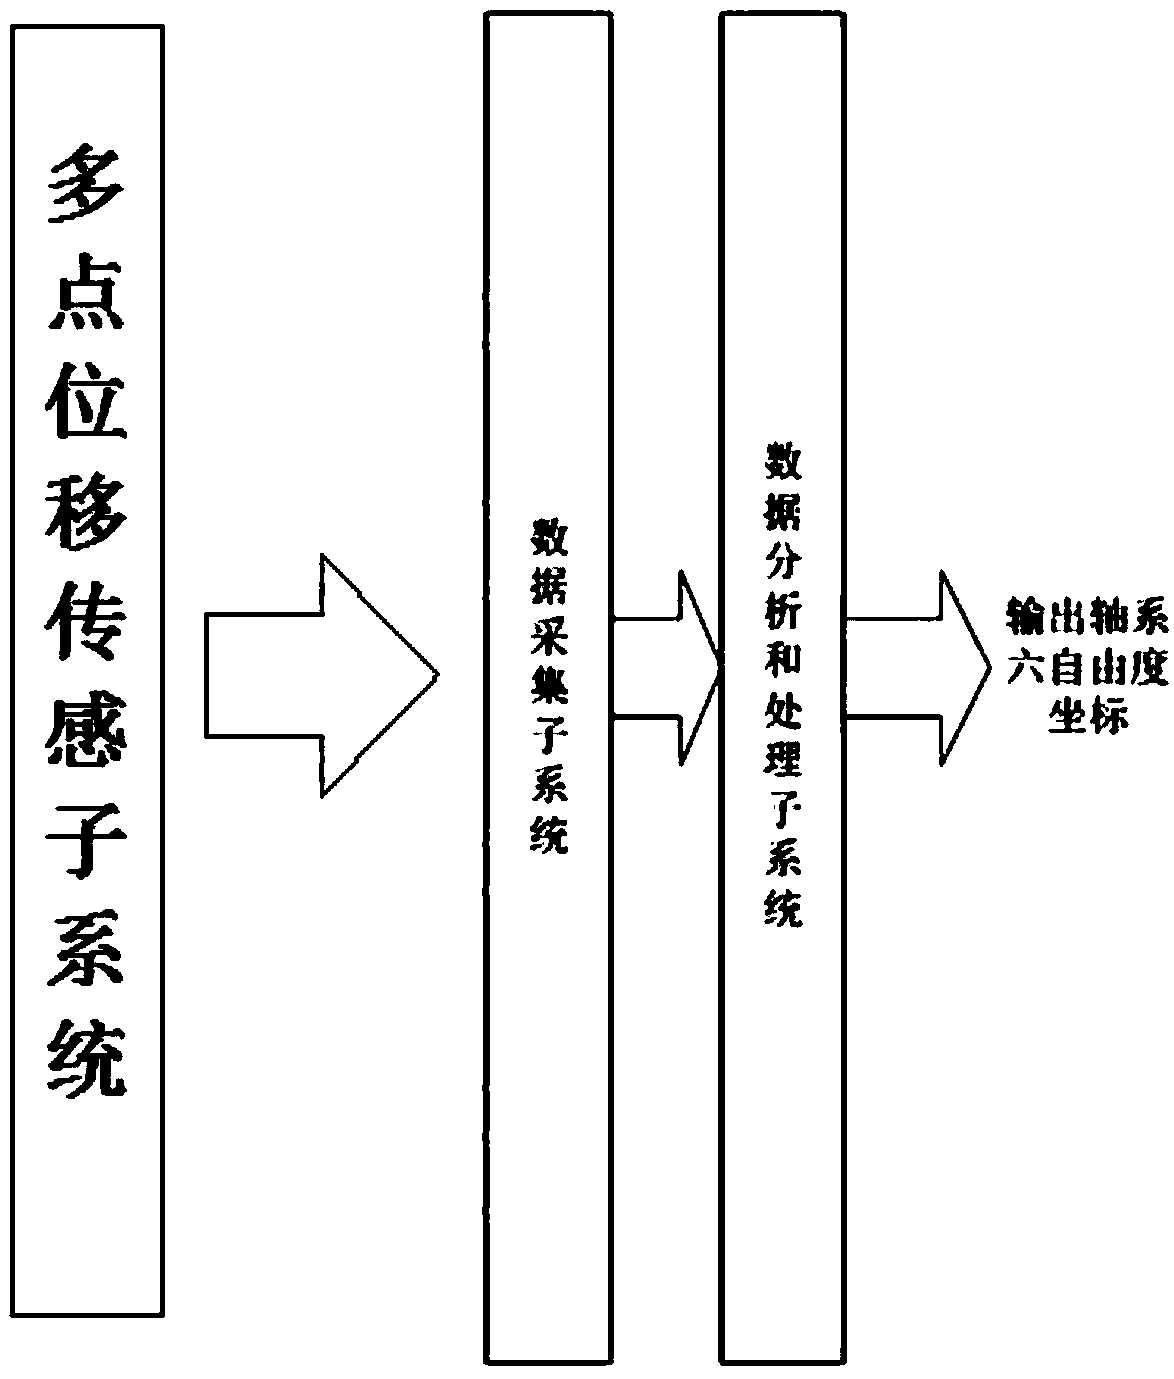 Circular grating-based shaft system five-degree-of-freedom error measurement method, six-degree-of-freedom error measurement method and measurement system